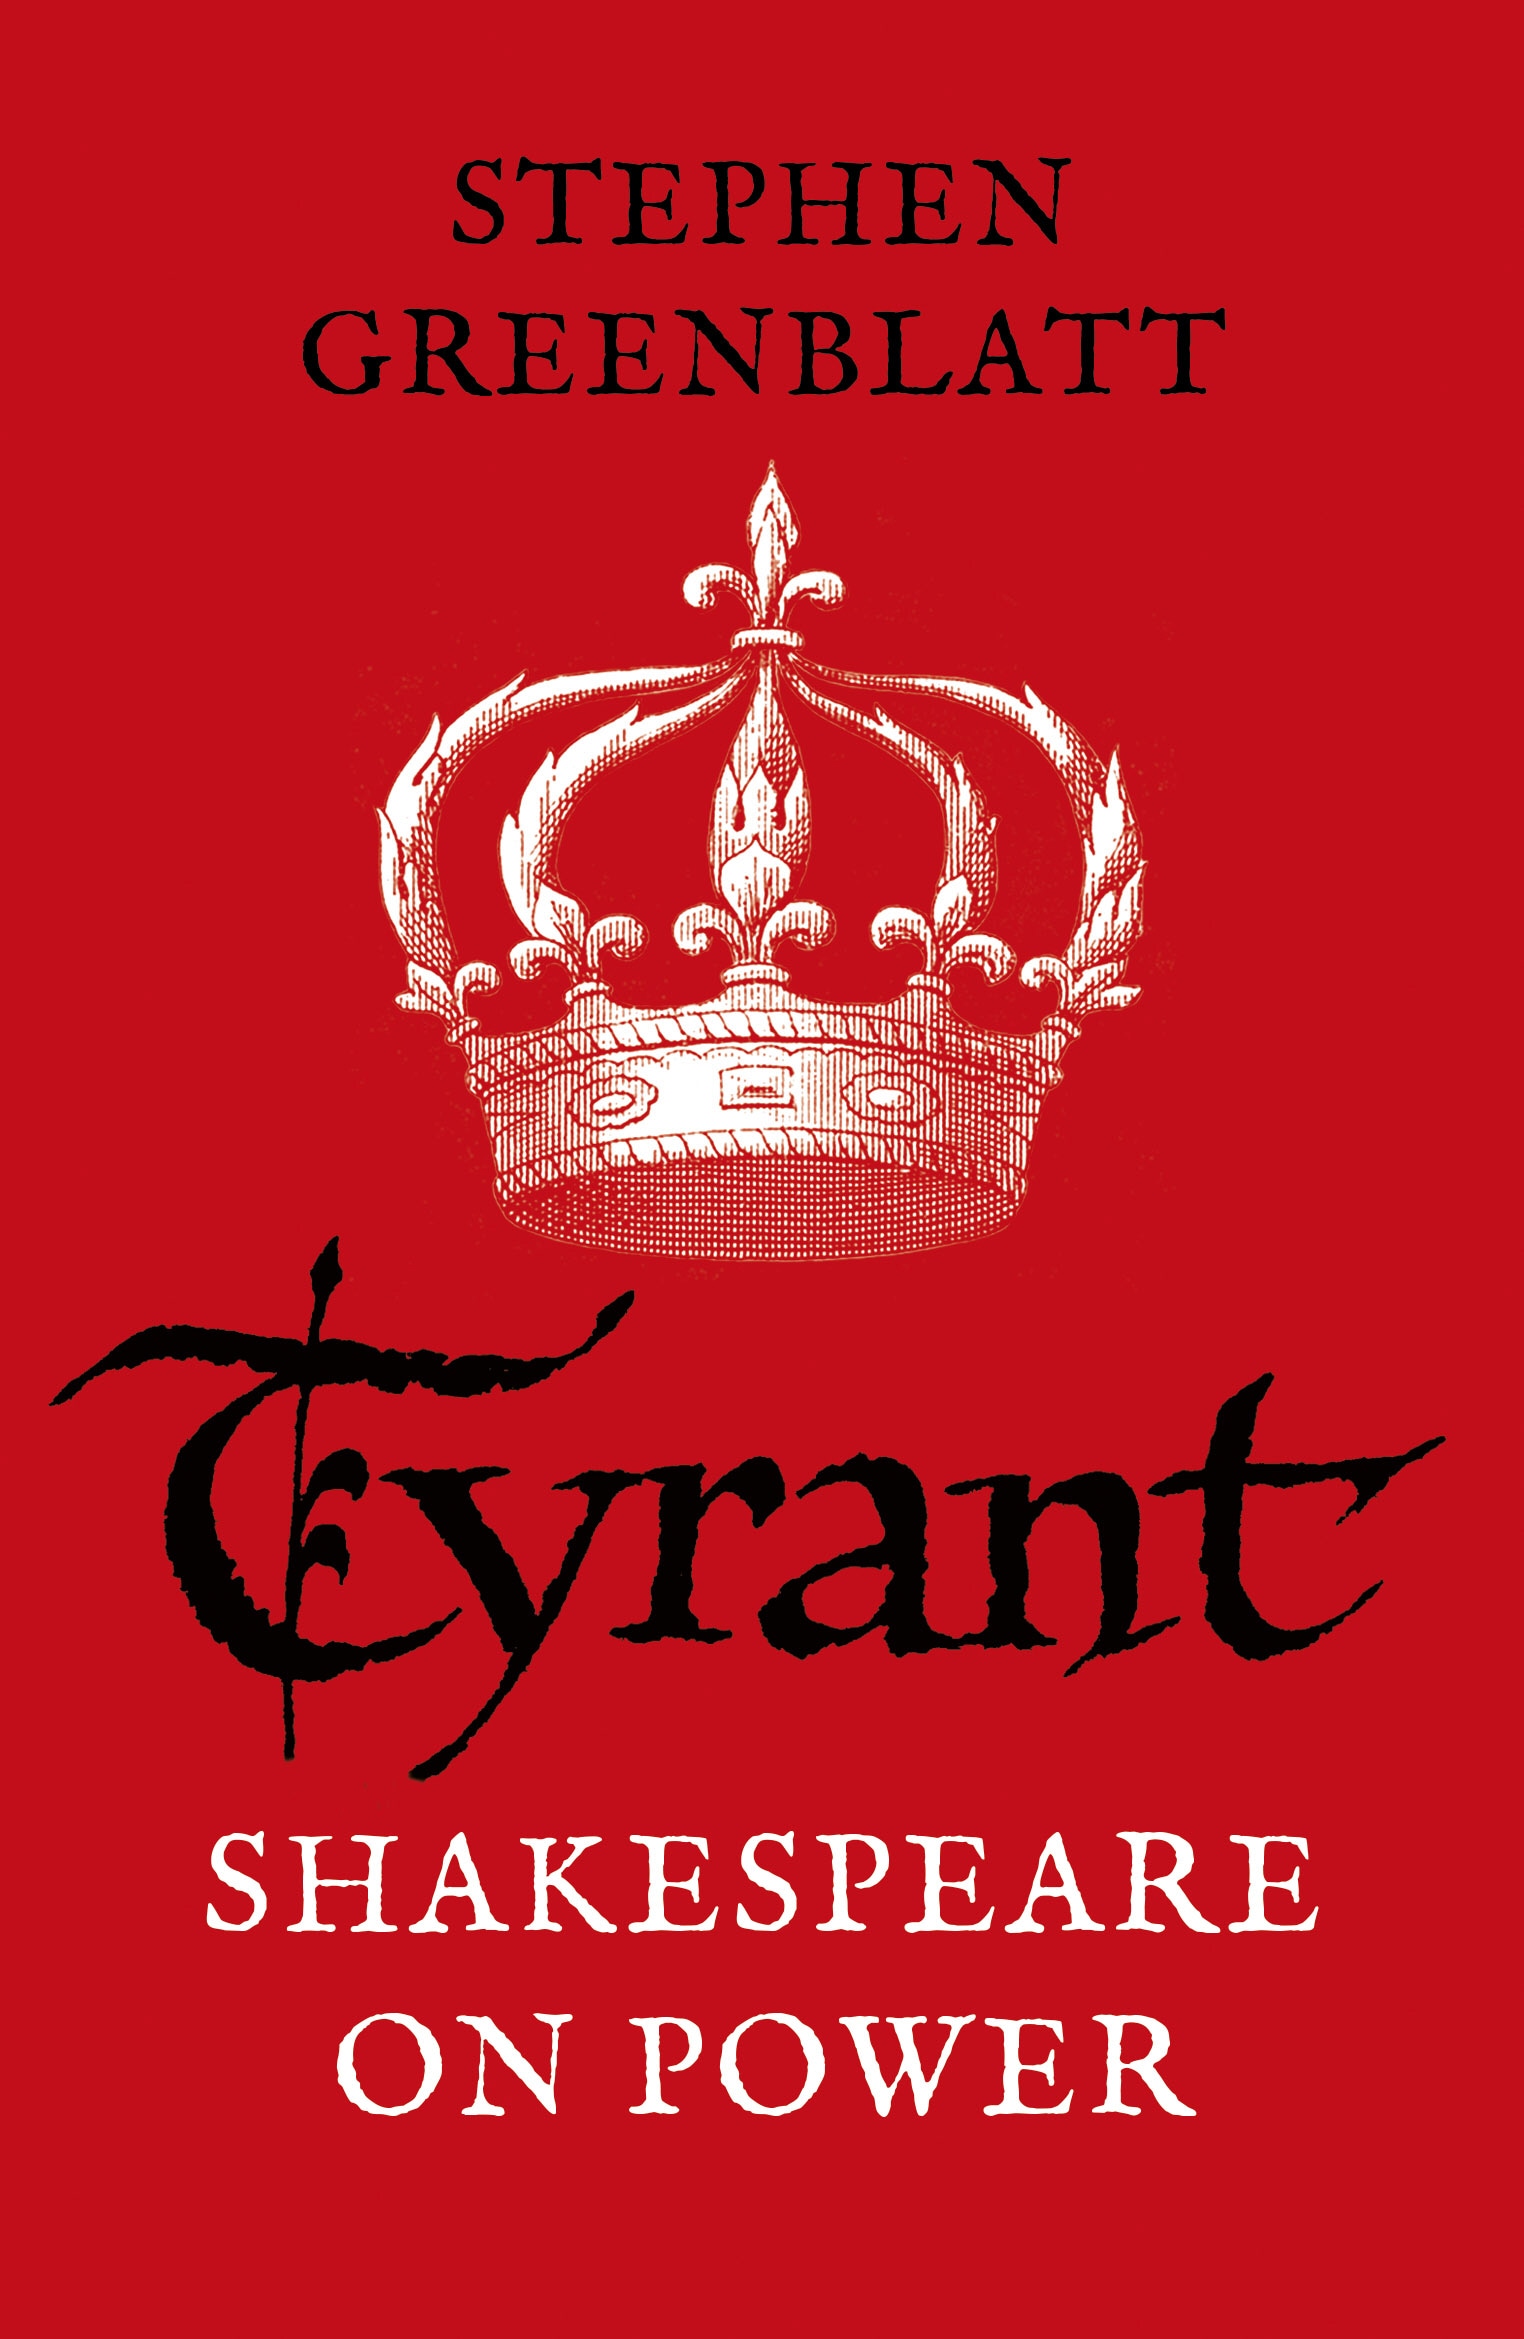 Book “Tyrant” by Stephen Greenblatt — May 23, 2019